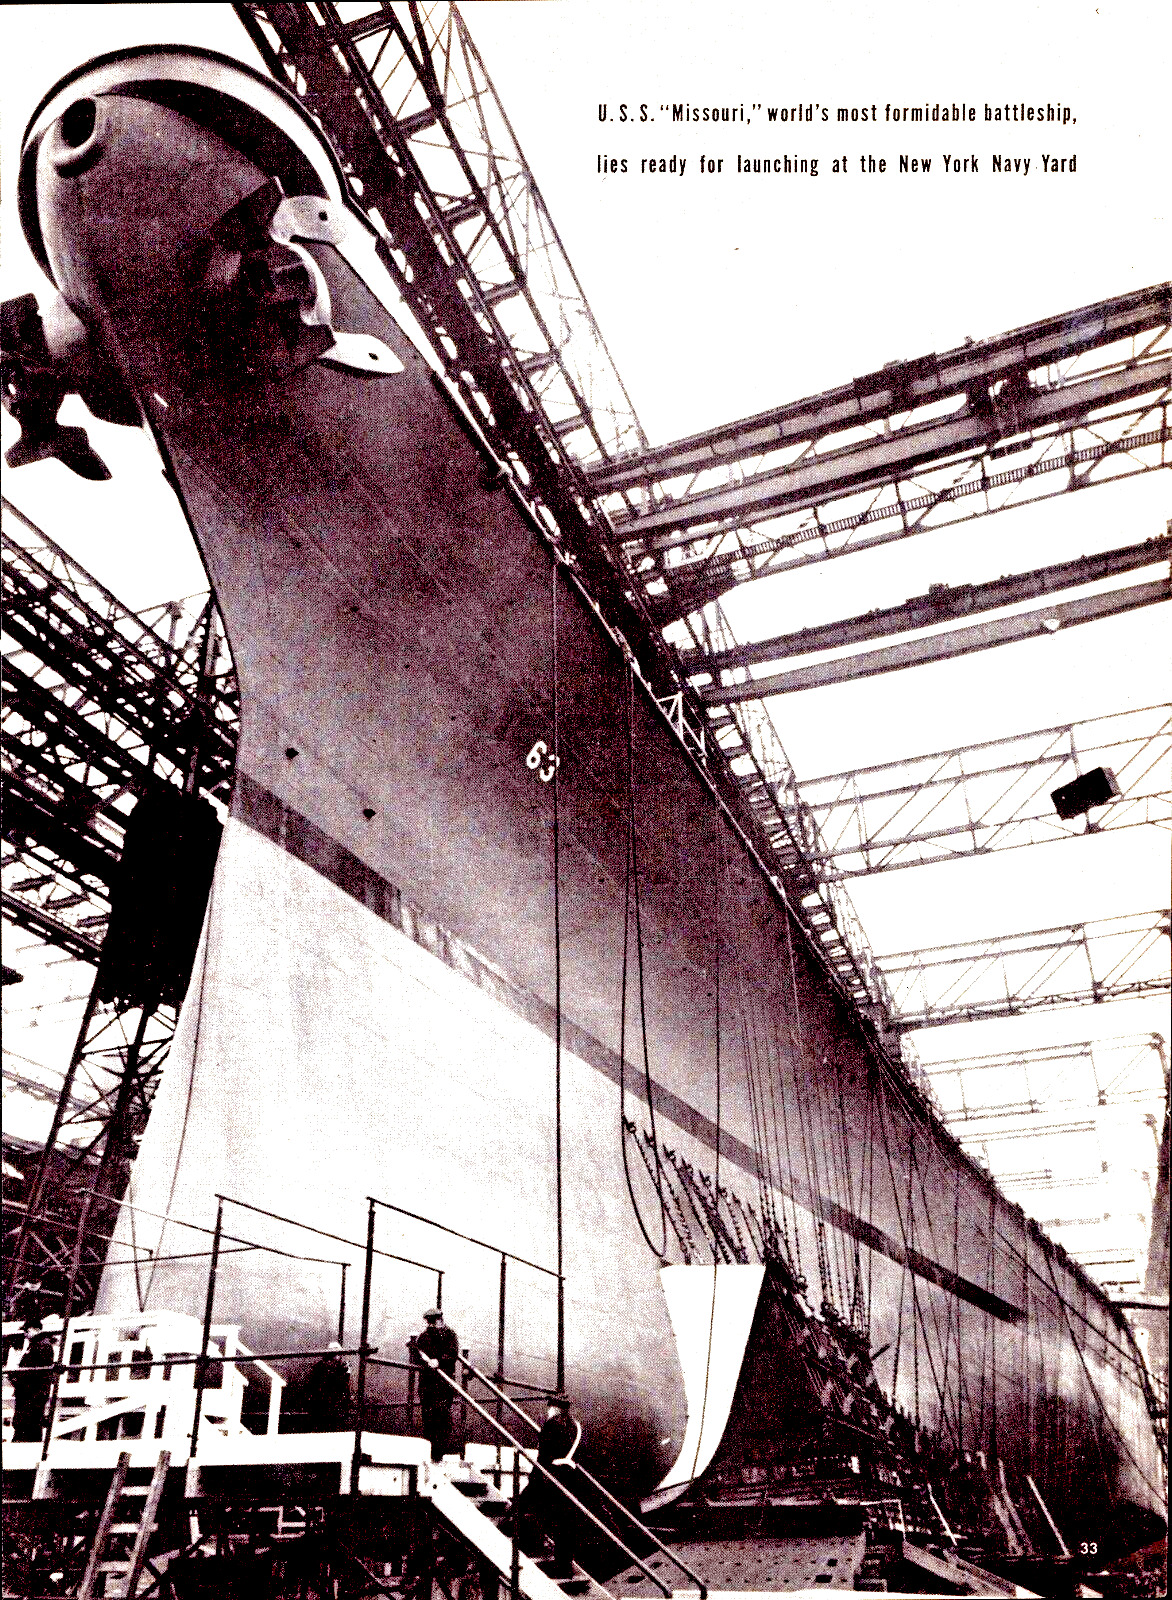 1944 U S S Missouri Battleship Vintage Print WW11 New York Navy Yard Launching